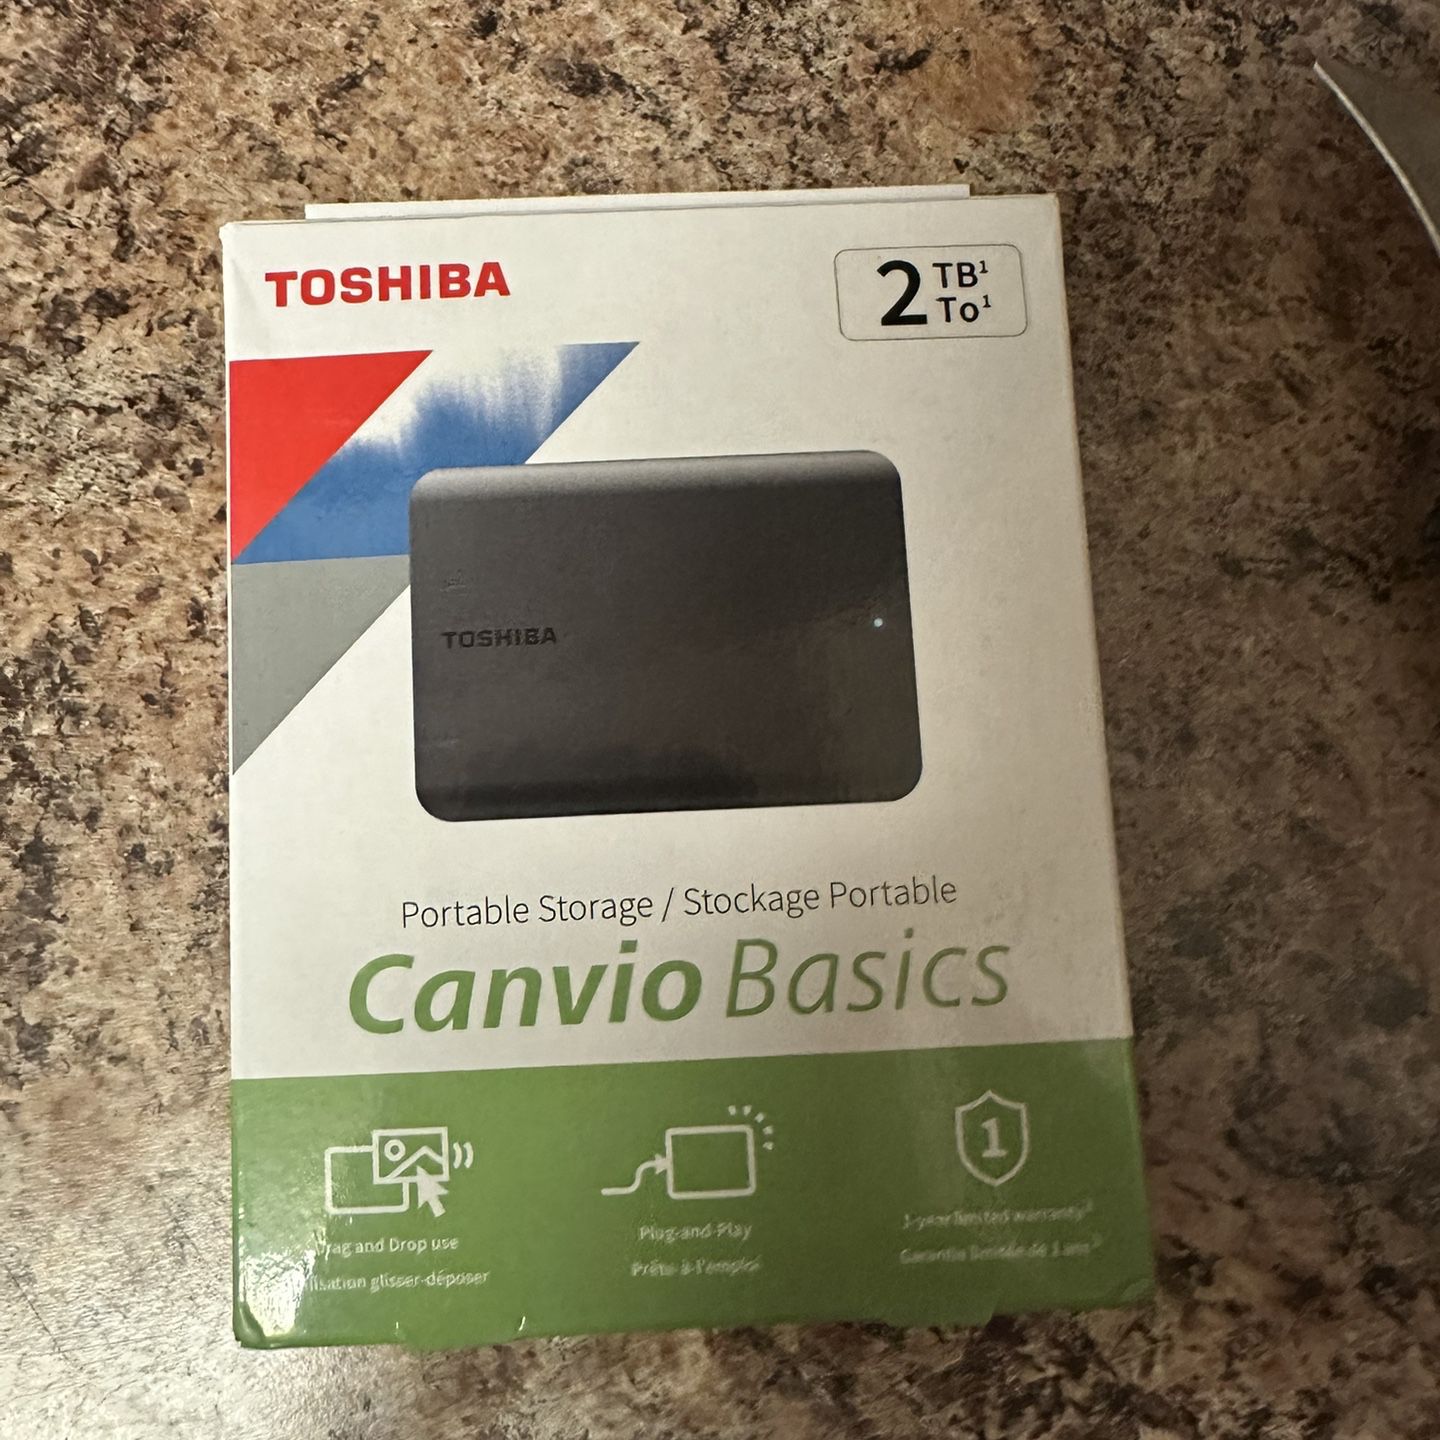 2 Terabyte Toshiba External Storage Brand New